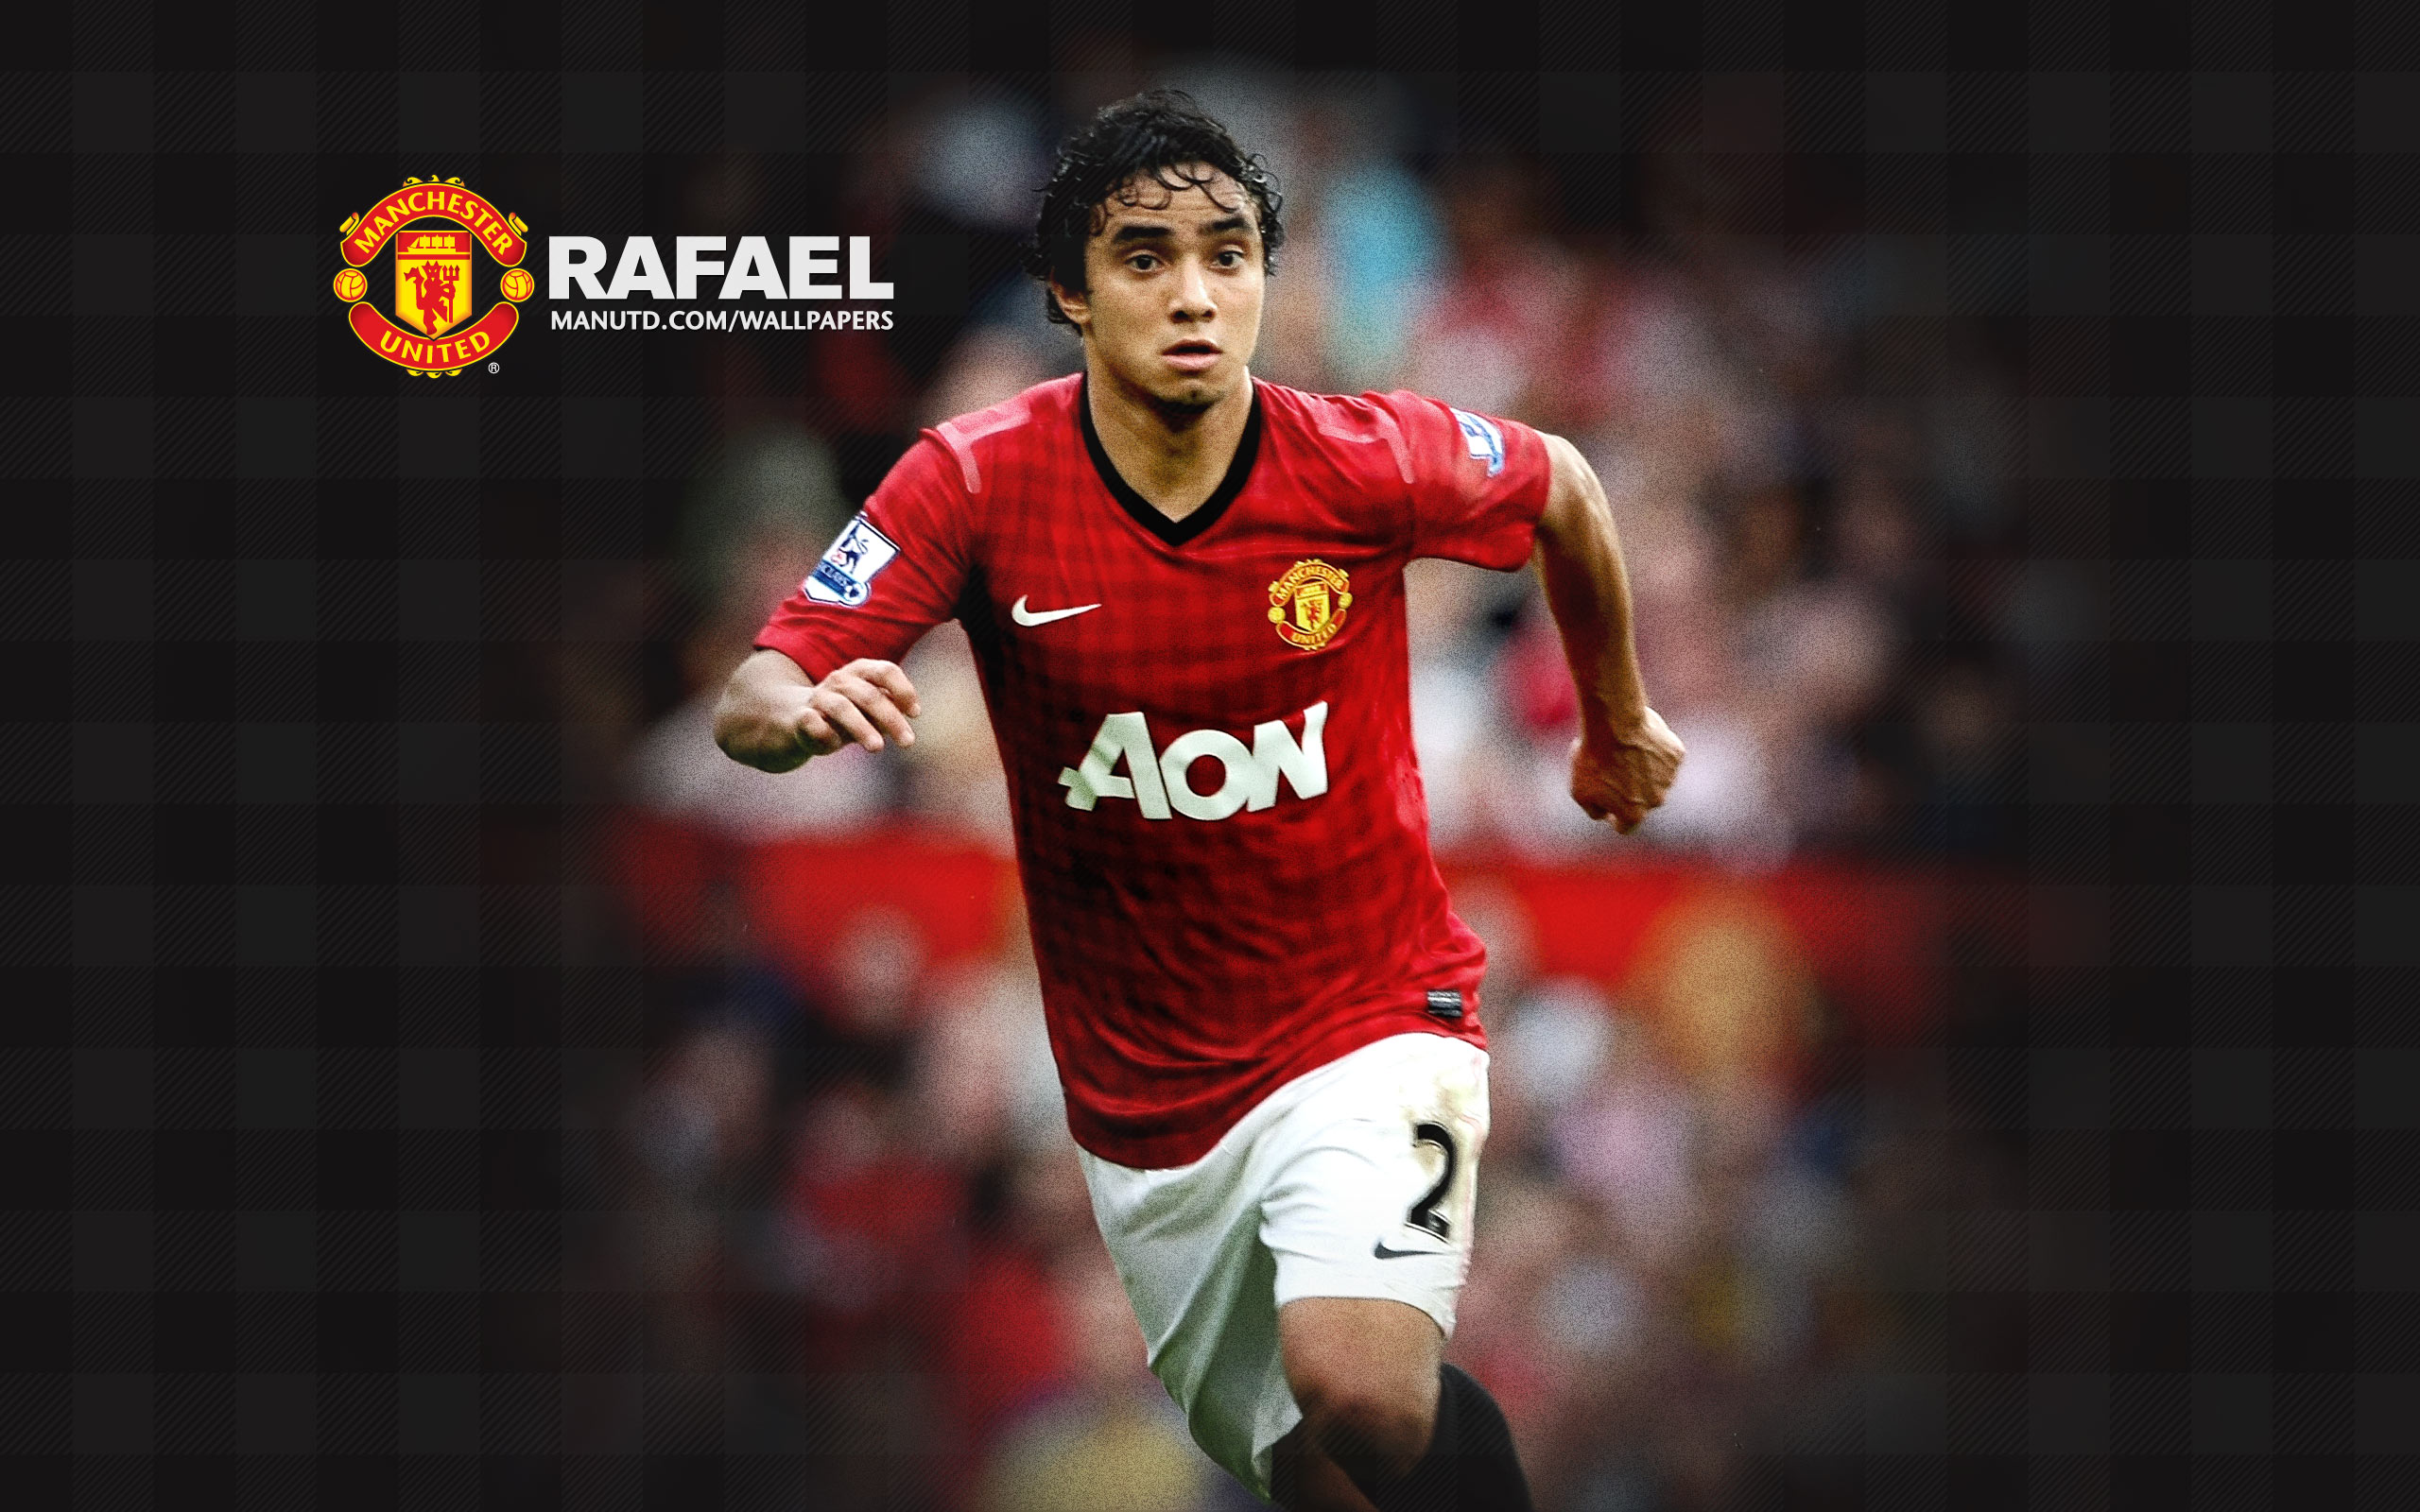 Manchester United Players Wallpaper 20122013 2 Rafael da Silva